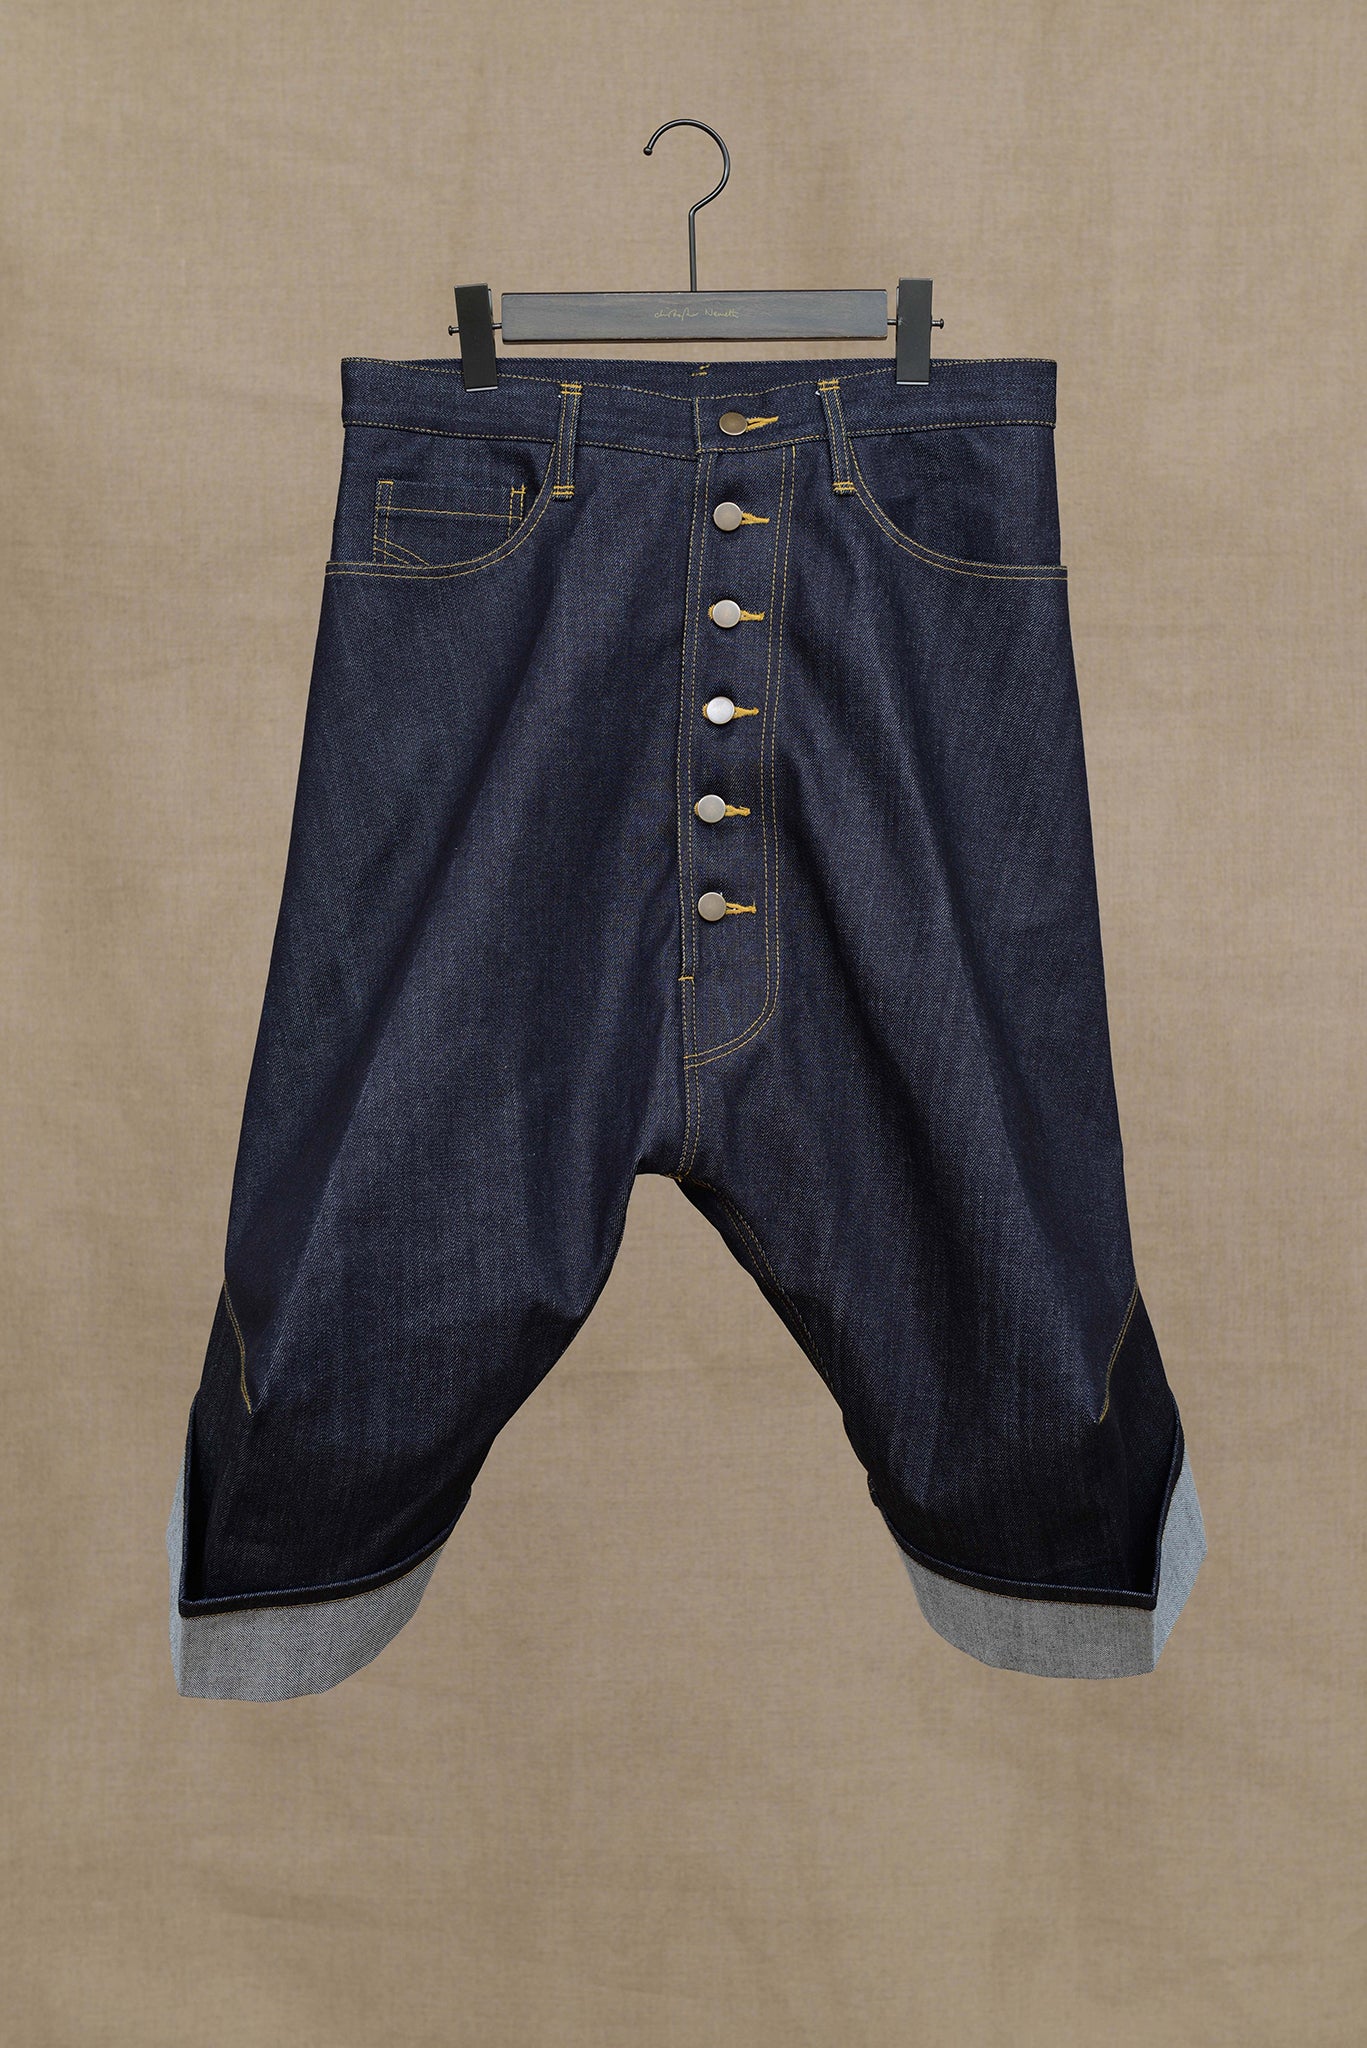 Christopher Nemeth Harajuku Street Style w/ Rope Print Jacket, Beret &  Vintage Patent Pants – Tokyo Fashion